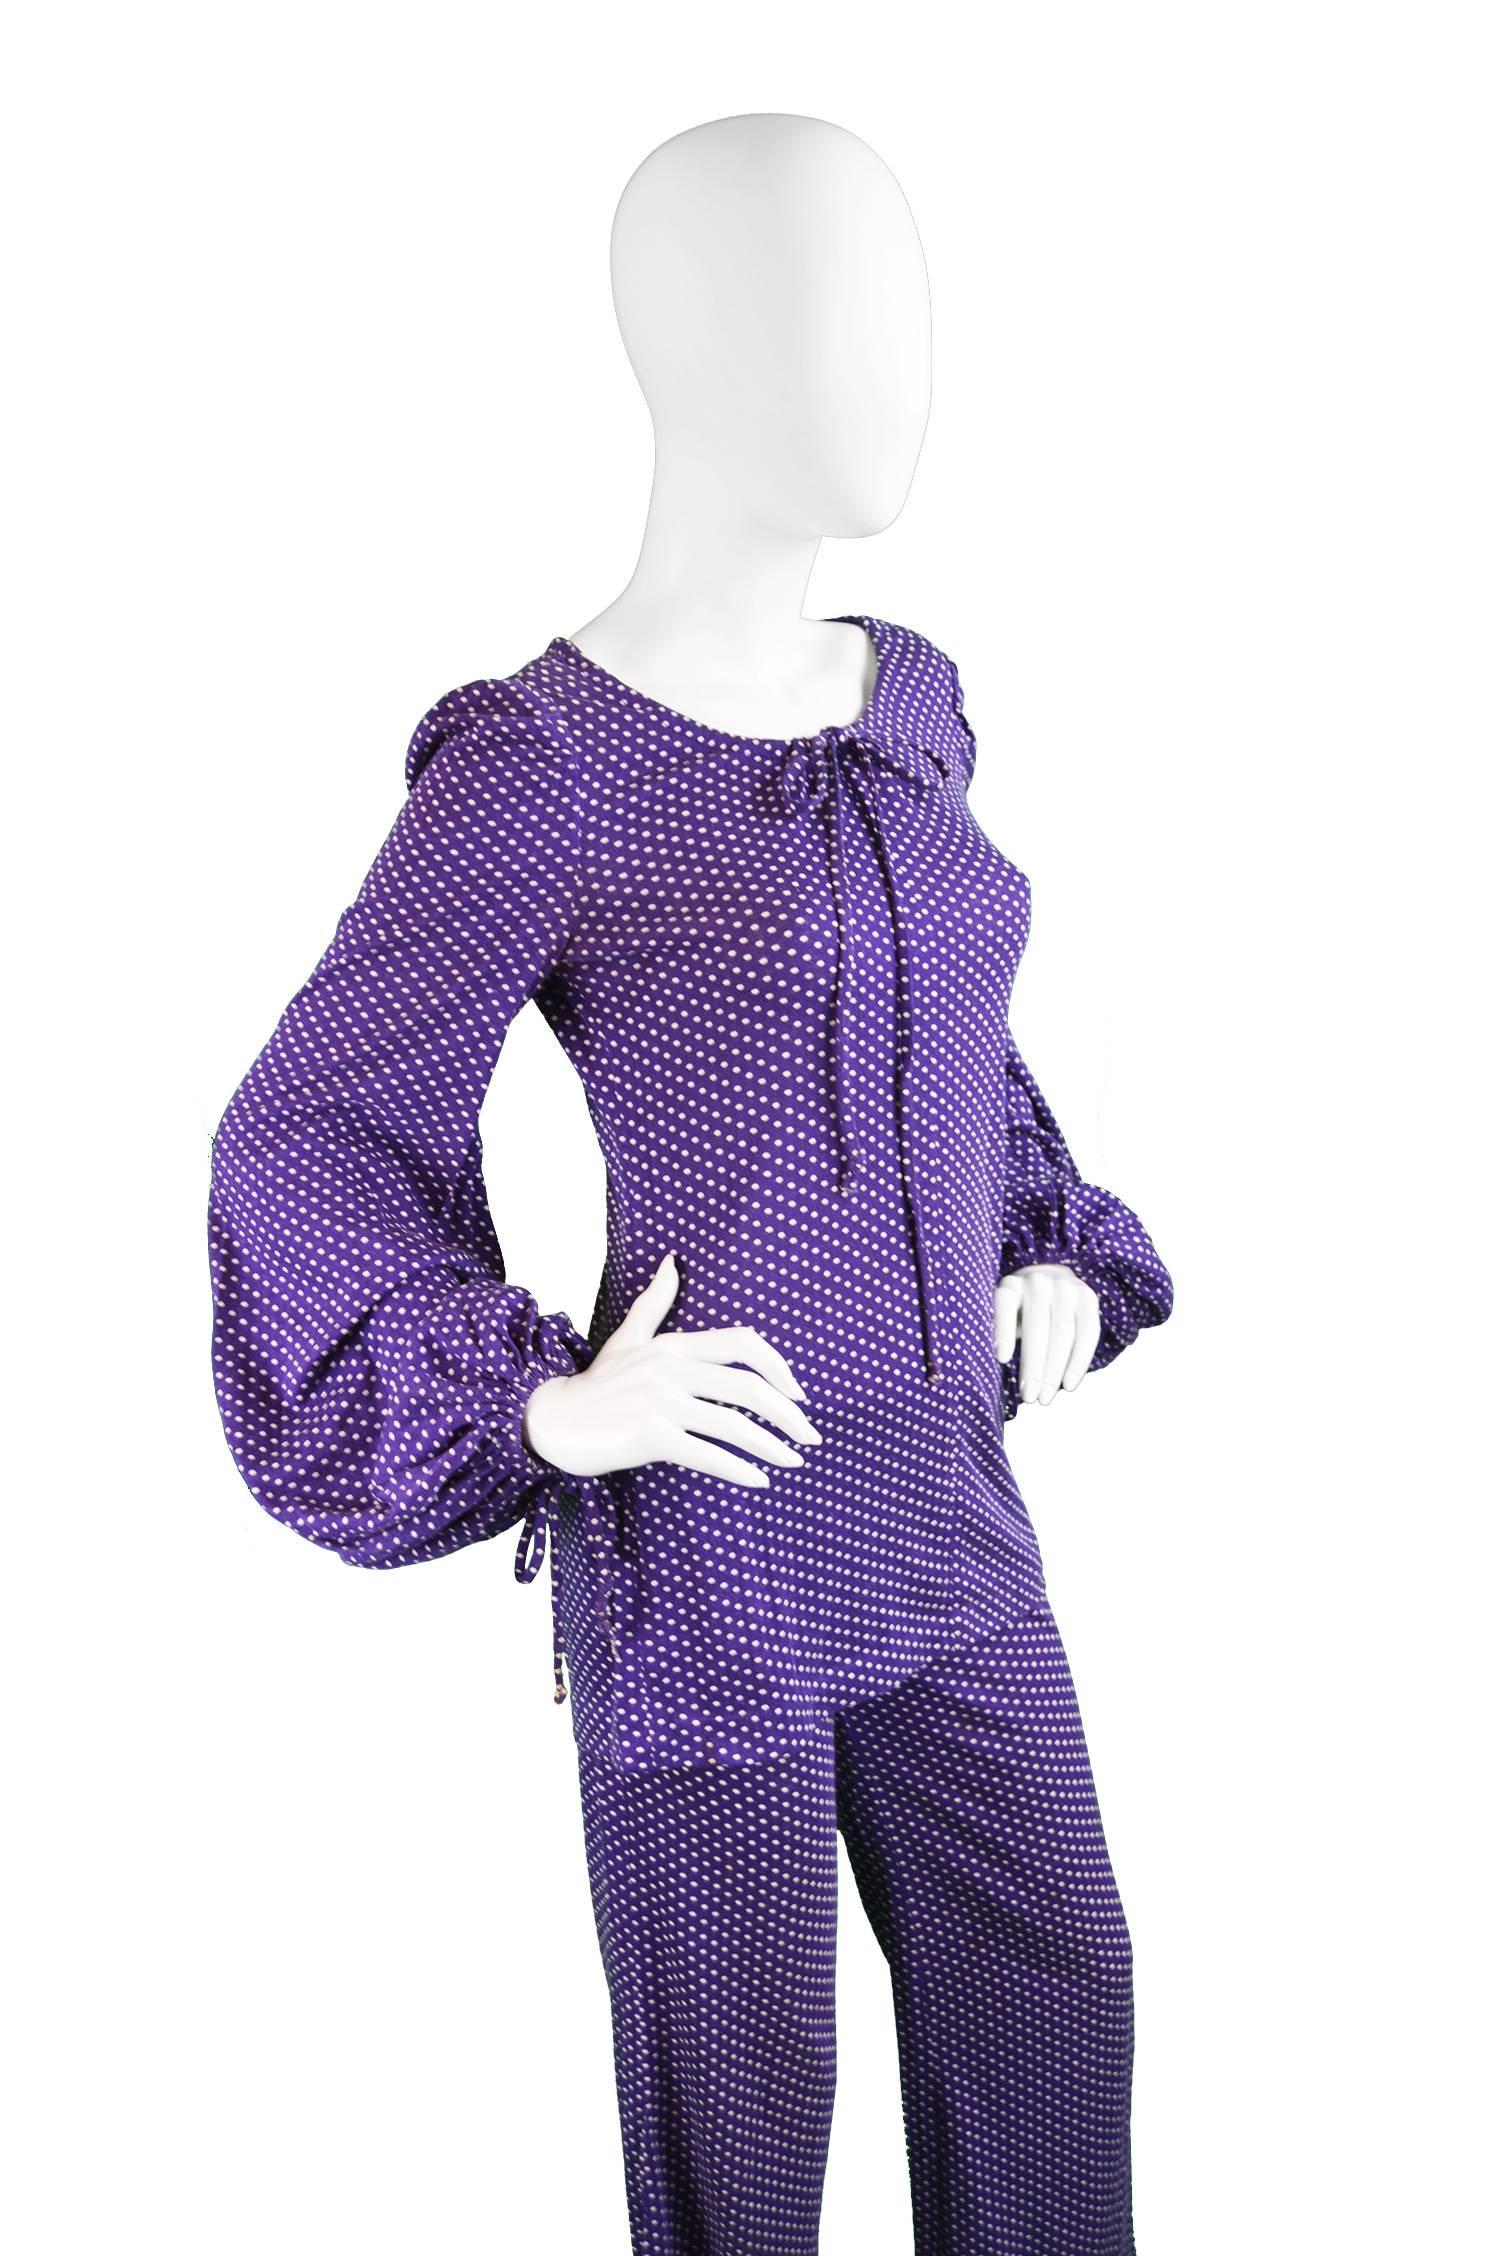 Women's Biba Purple Polka Dot Two Piece Tunic Top and Palazzo Pant Suit, 1970s